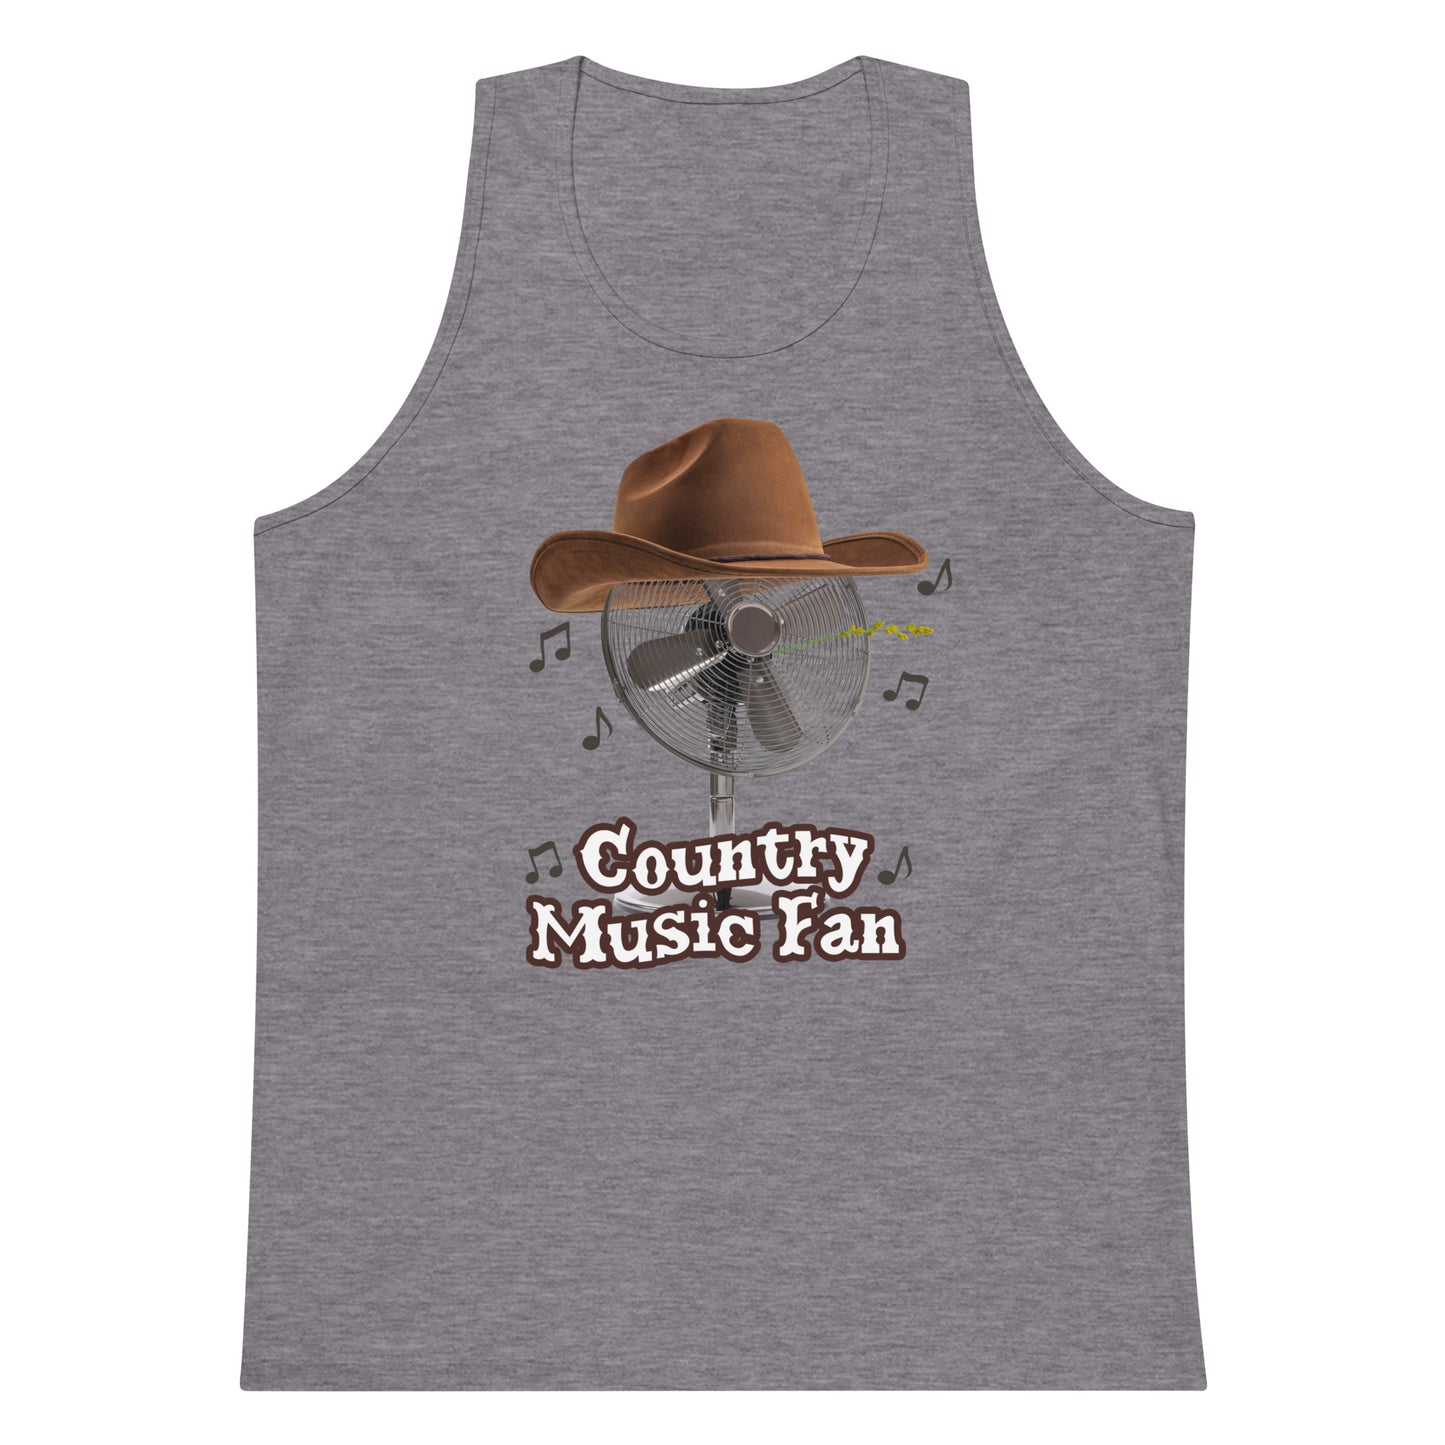 Country Music Fan tank top